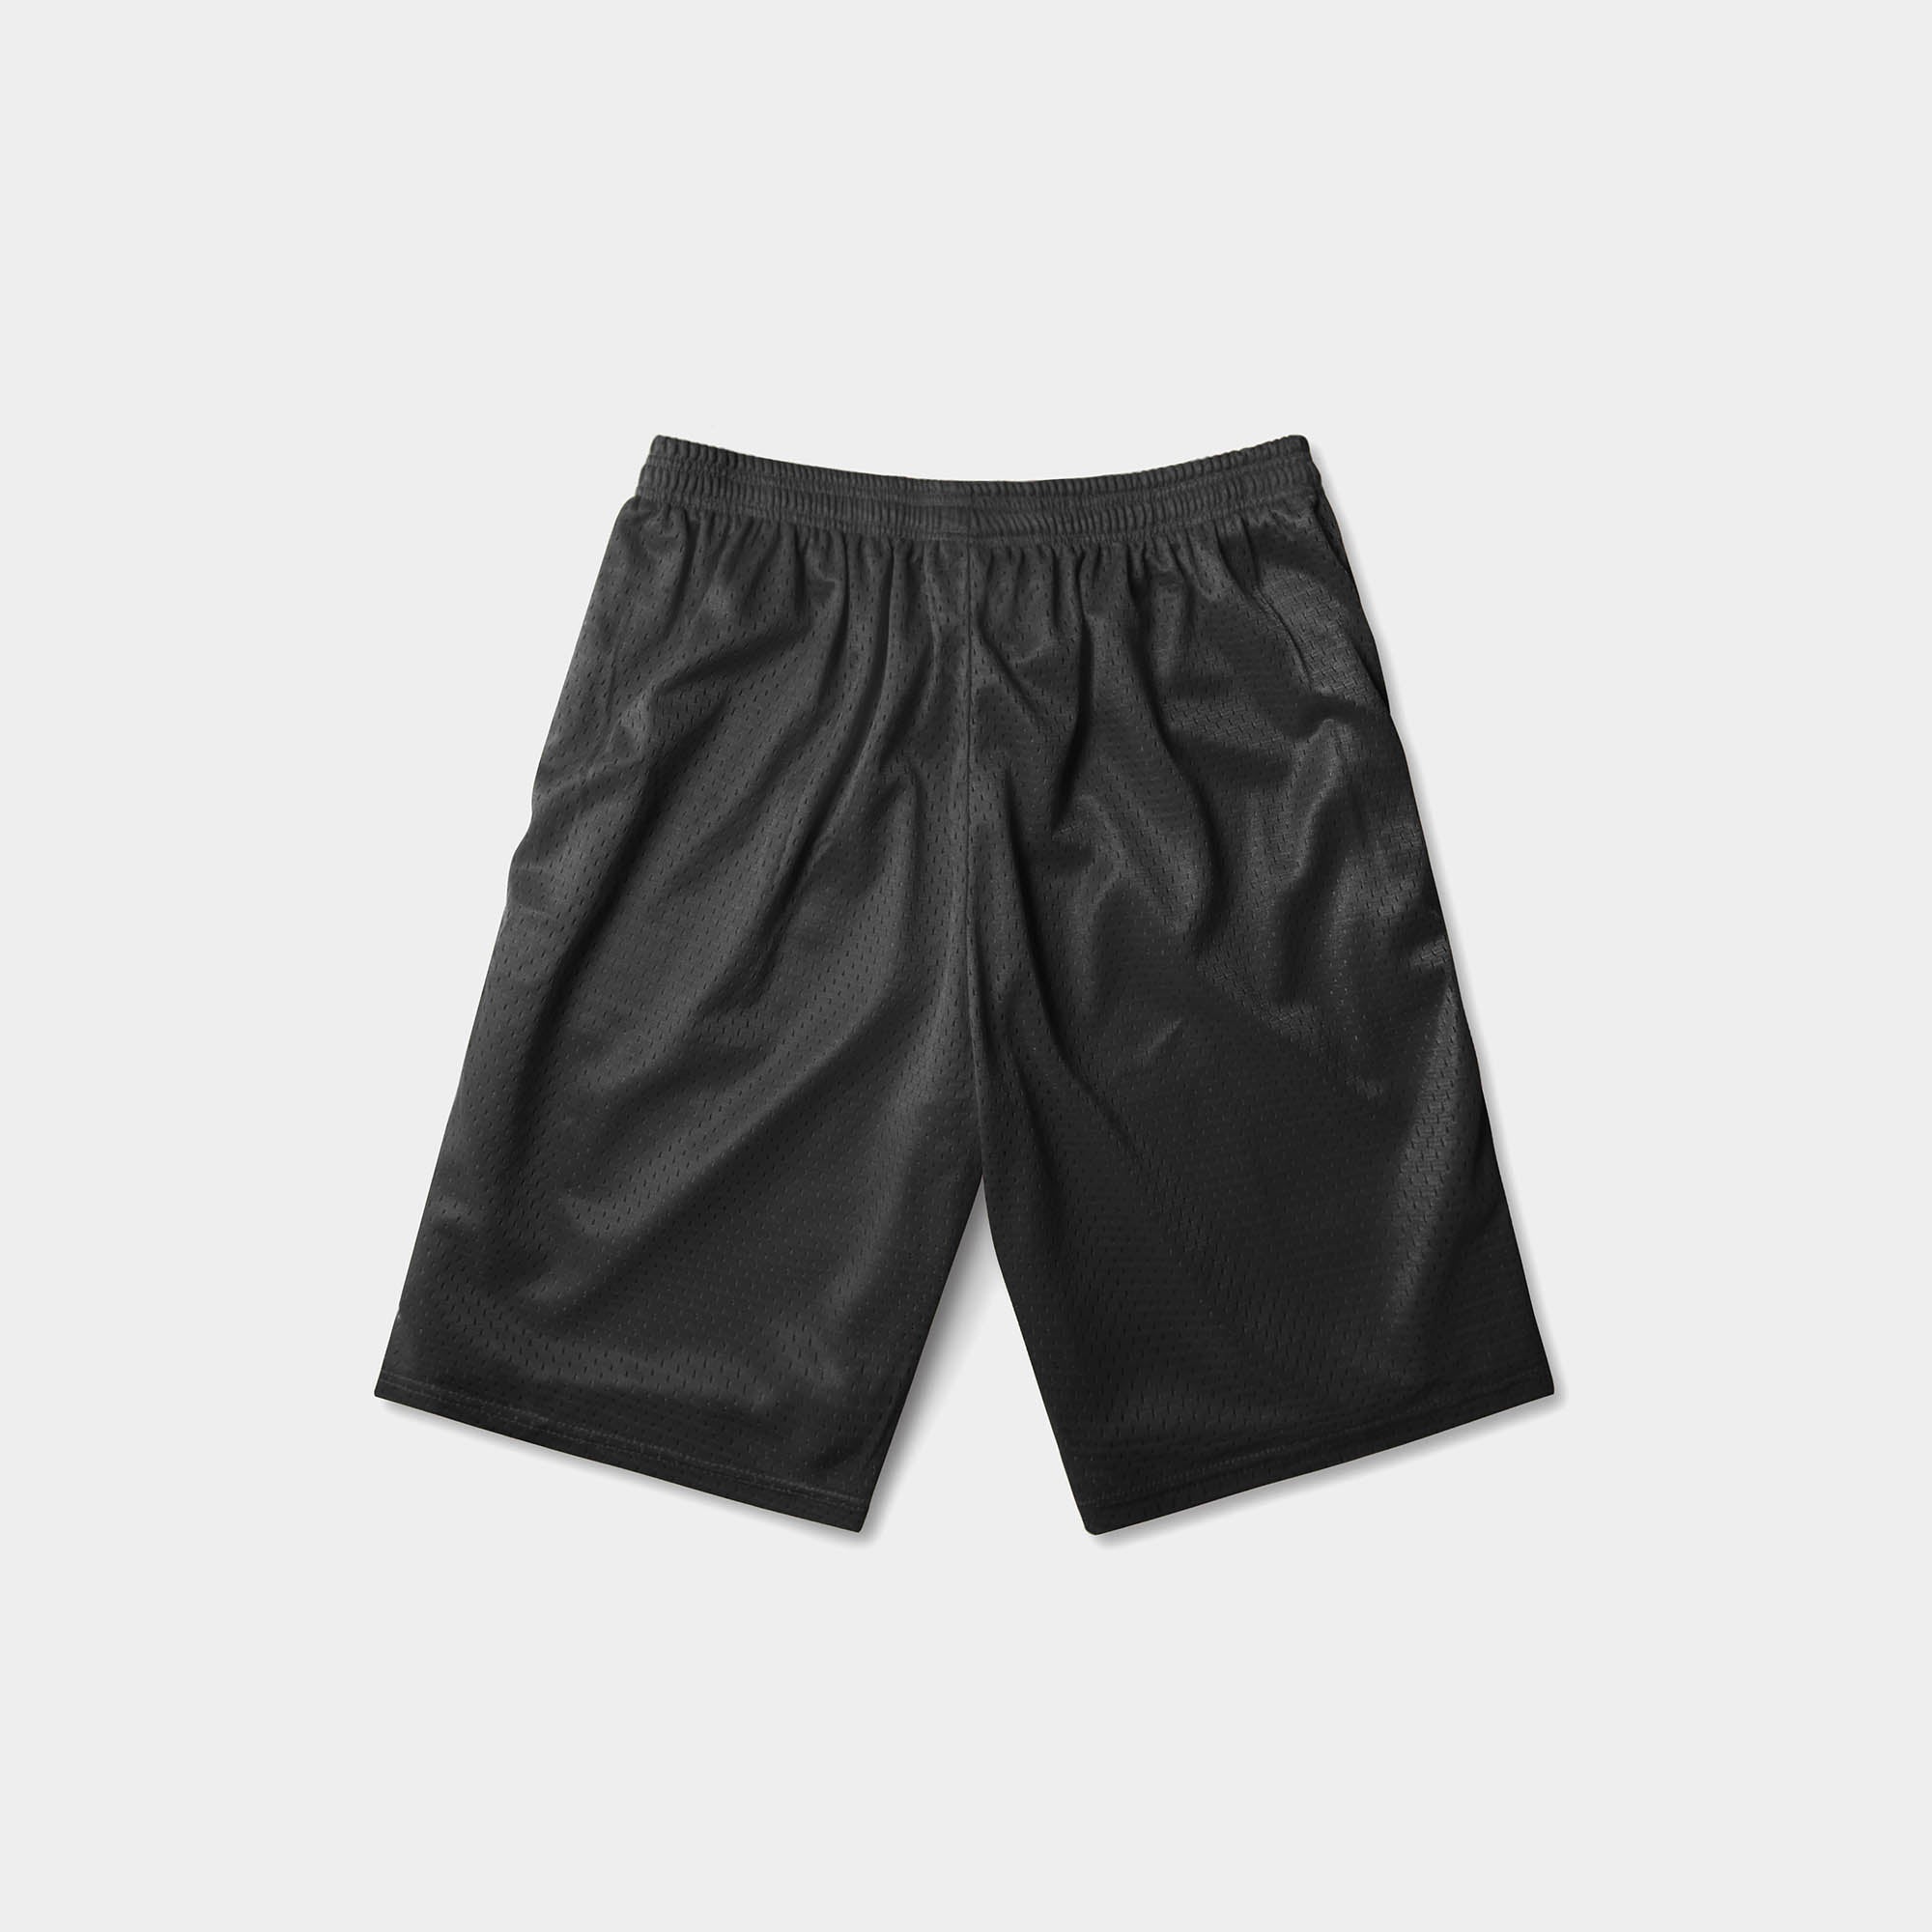 Black Signature Mesh Boy Shorts - ShopperBoard